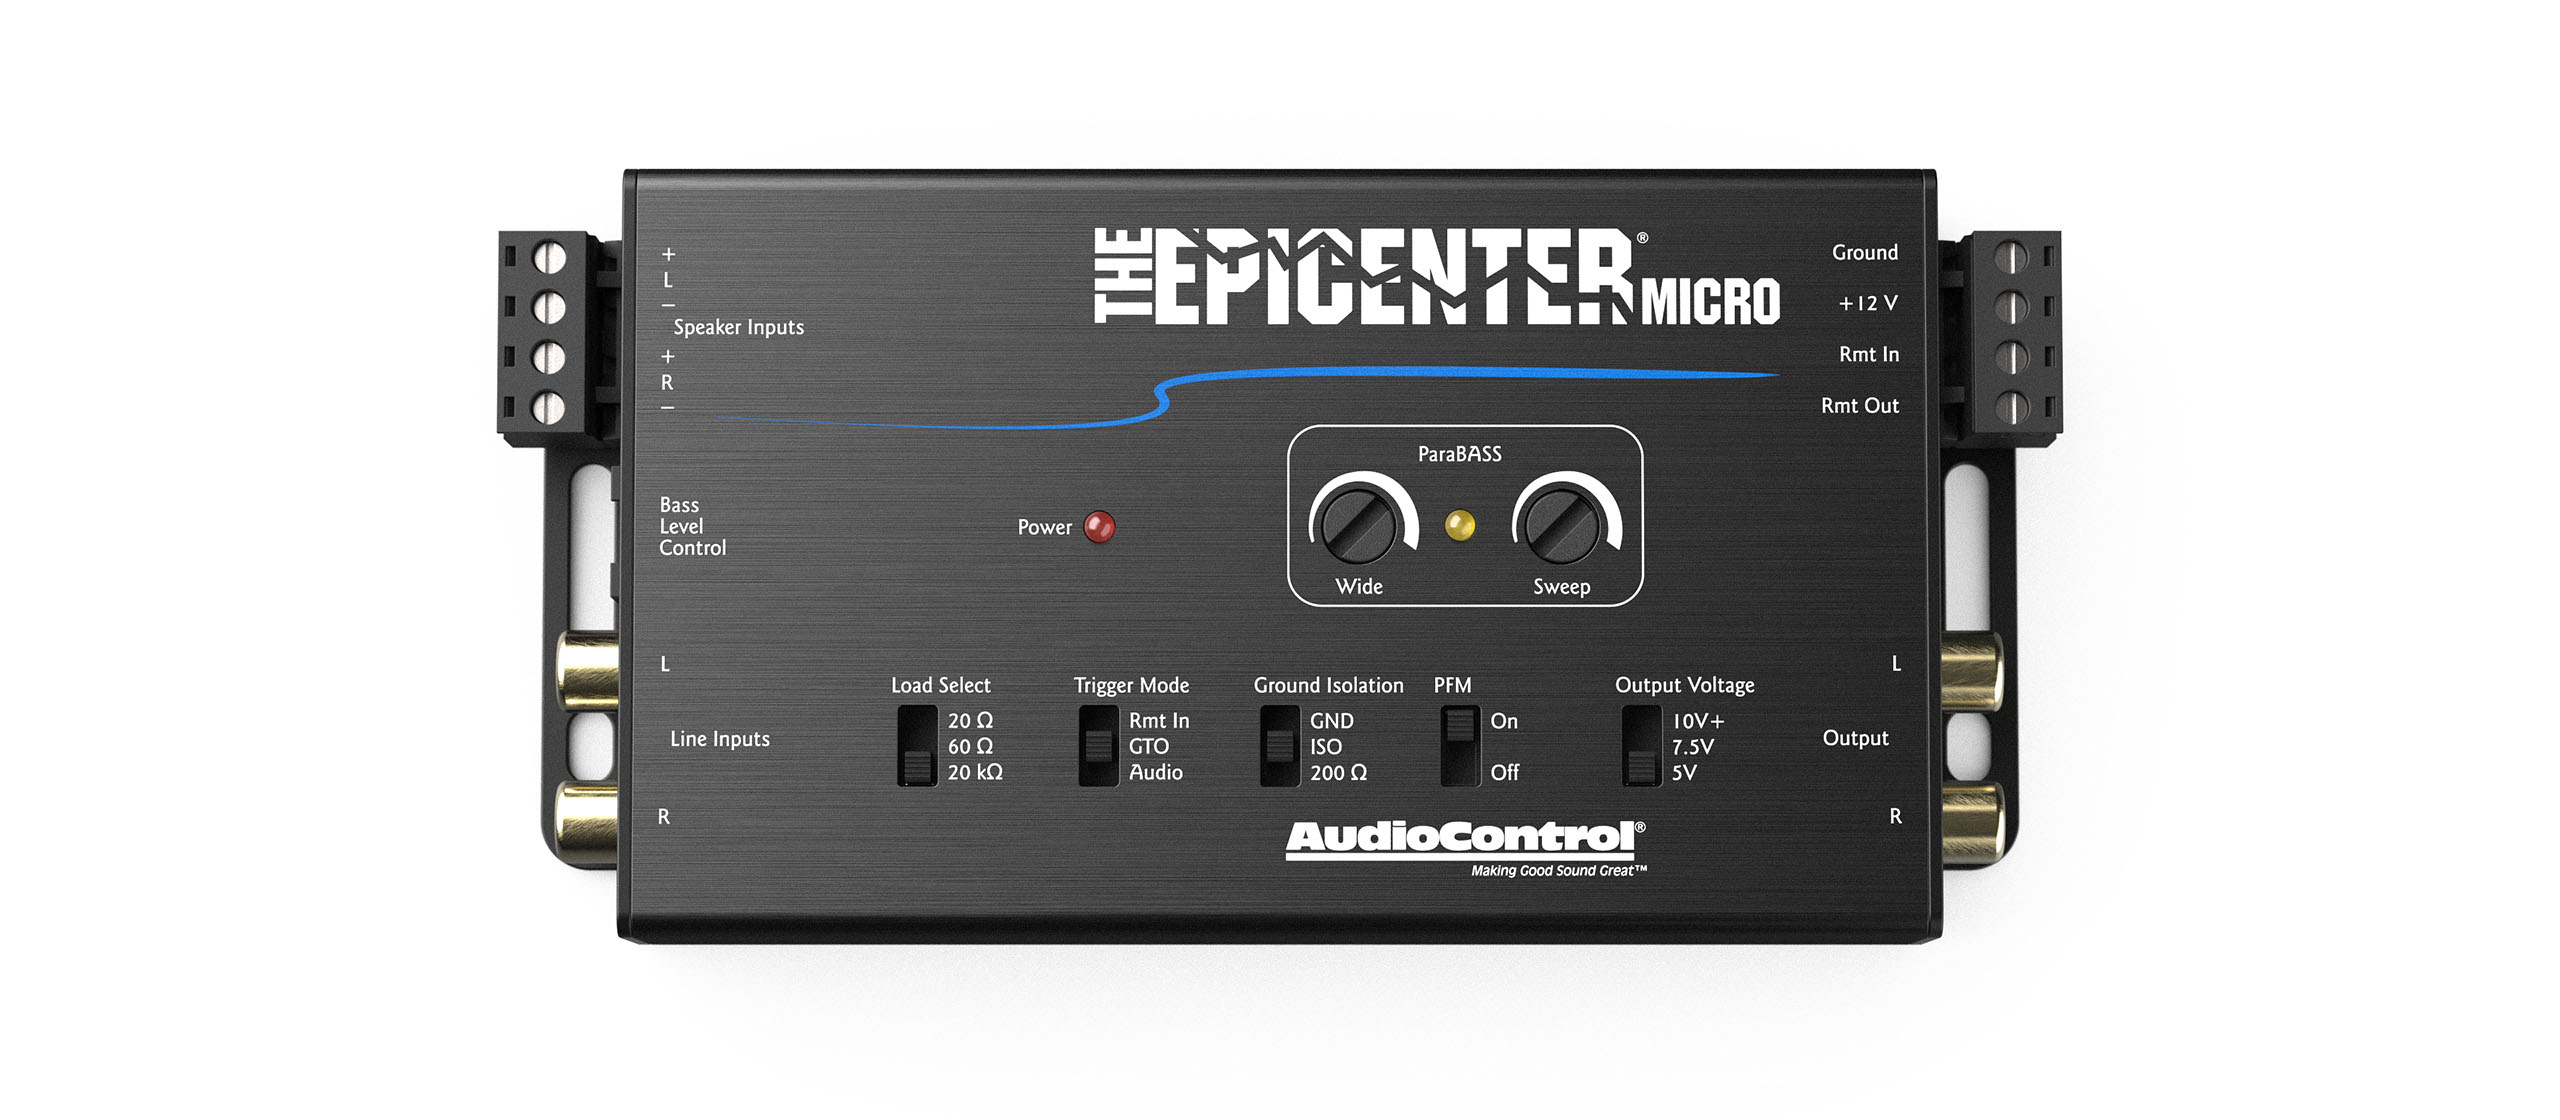 epicenter-micro-top